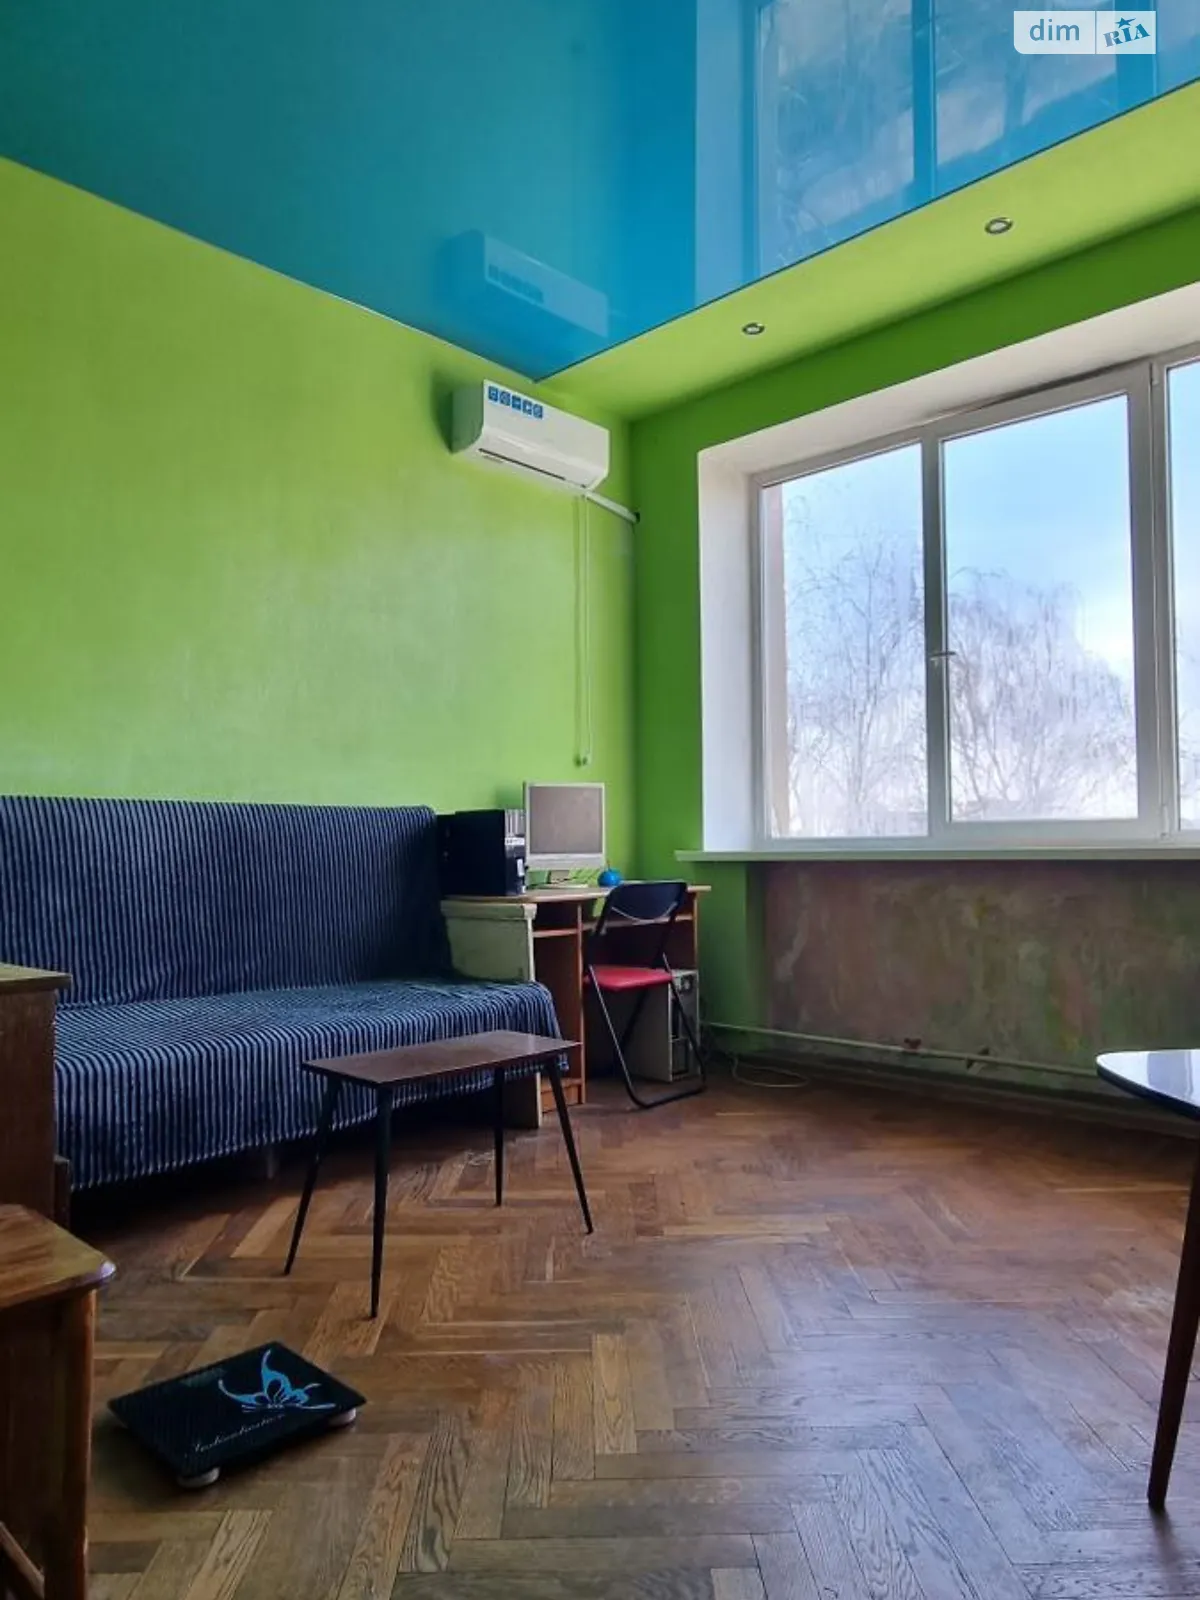 Продается комната 21 кв. м в Харькове - фото 4